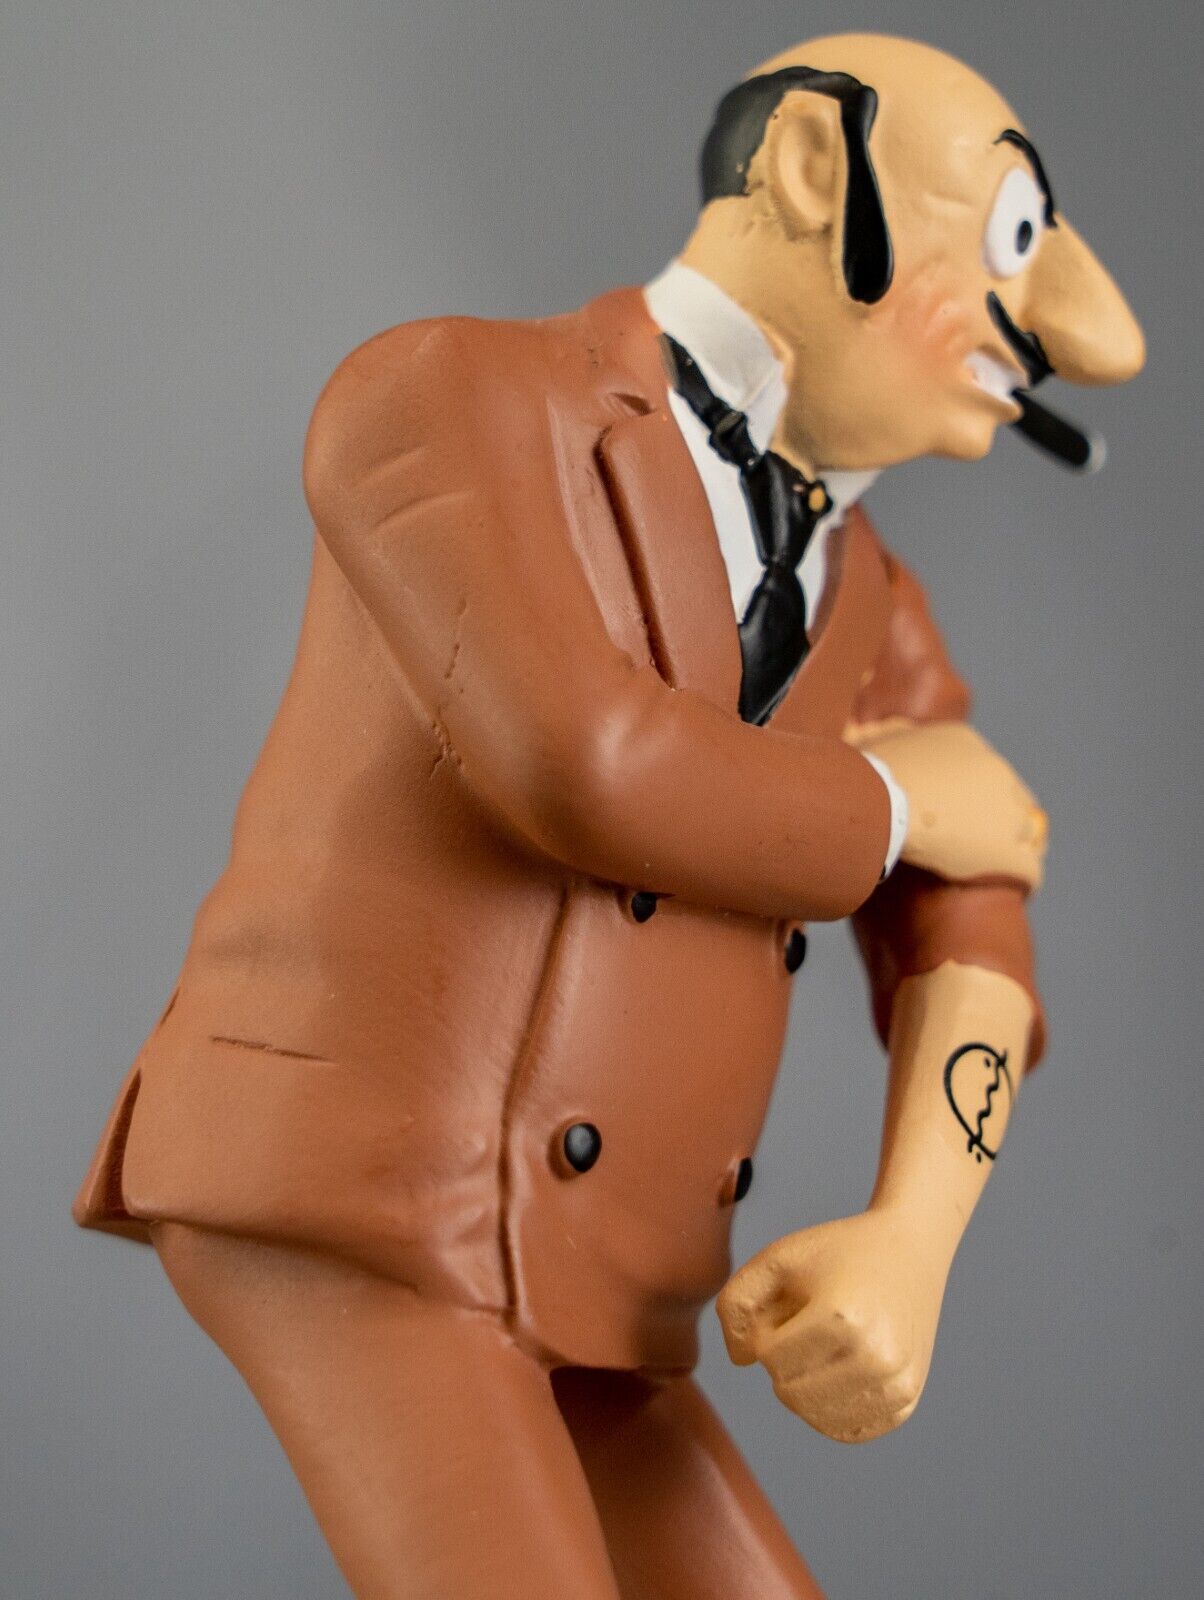 Tintin Figurine Moulinsart 42231 Rastapopoulos - Blue Lotus 12cm Resin Figure 9